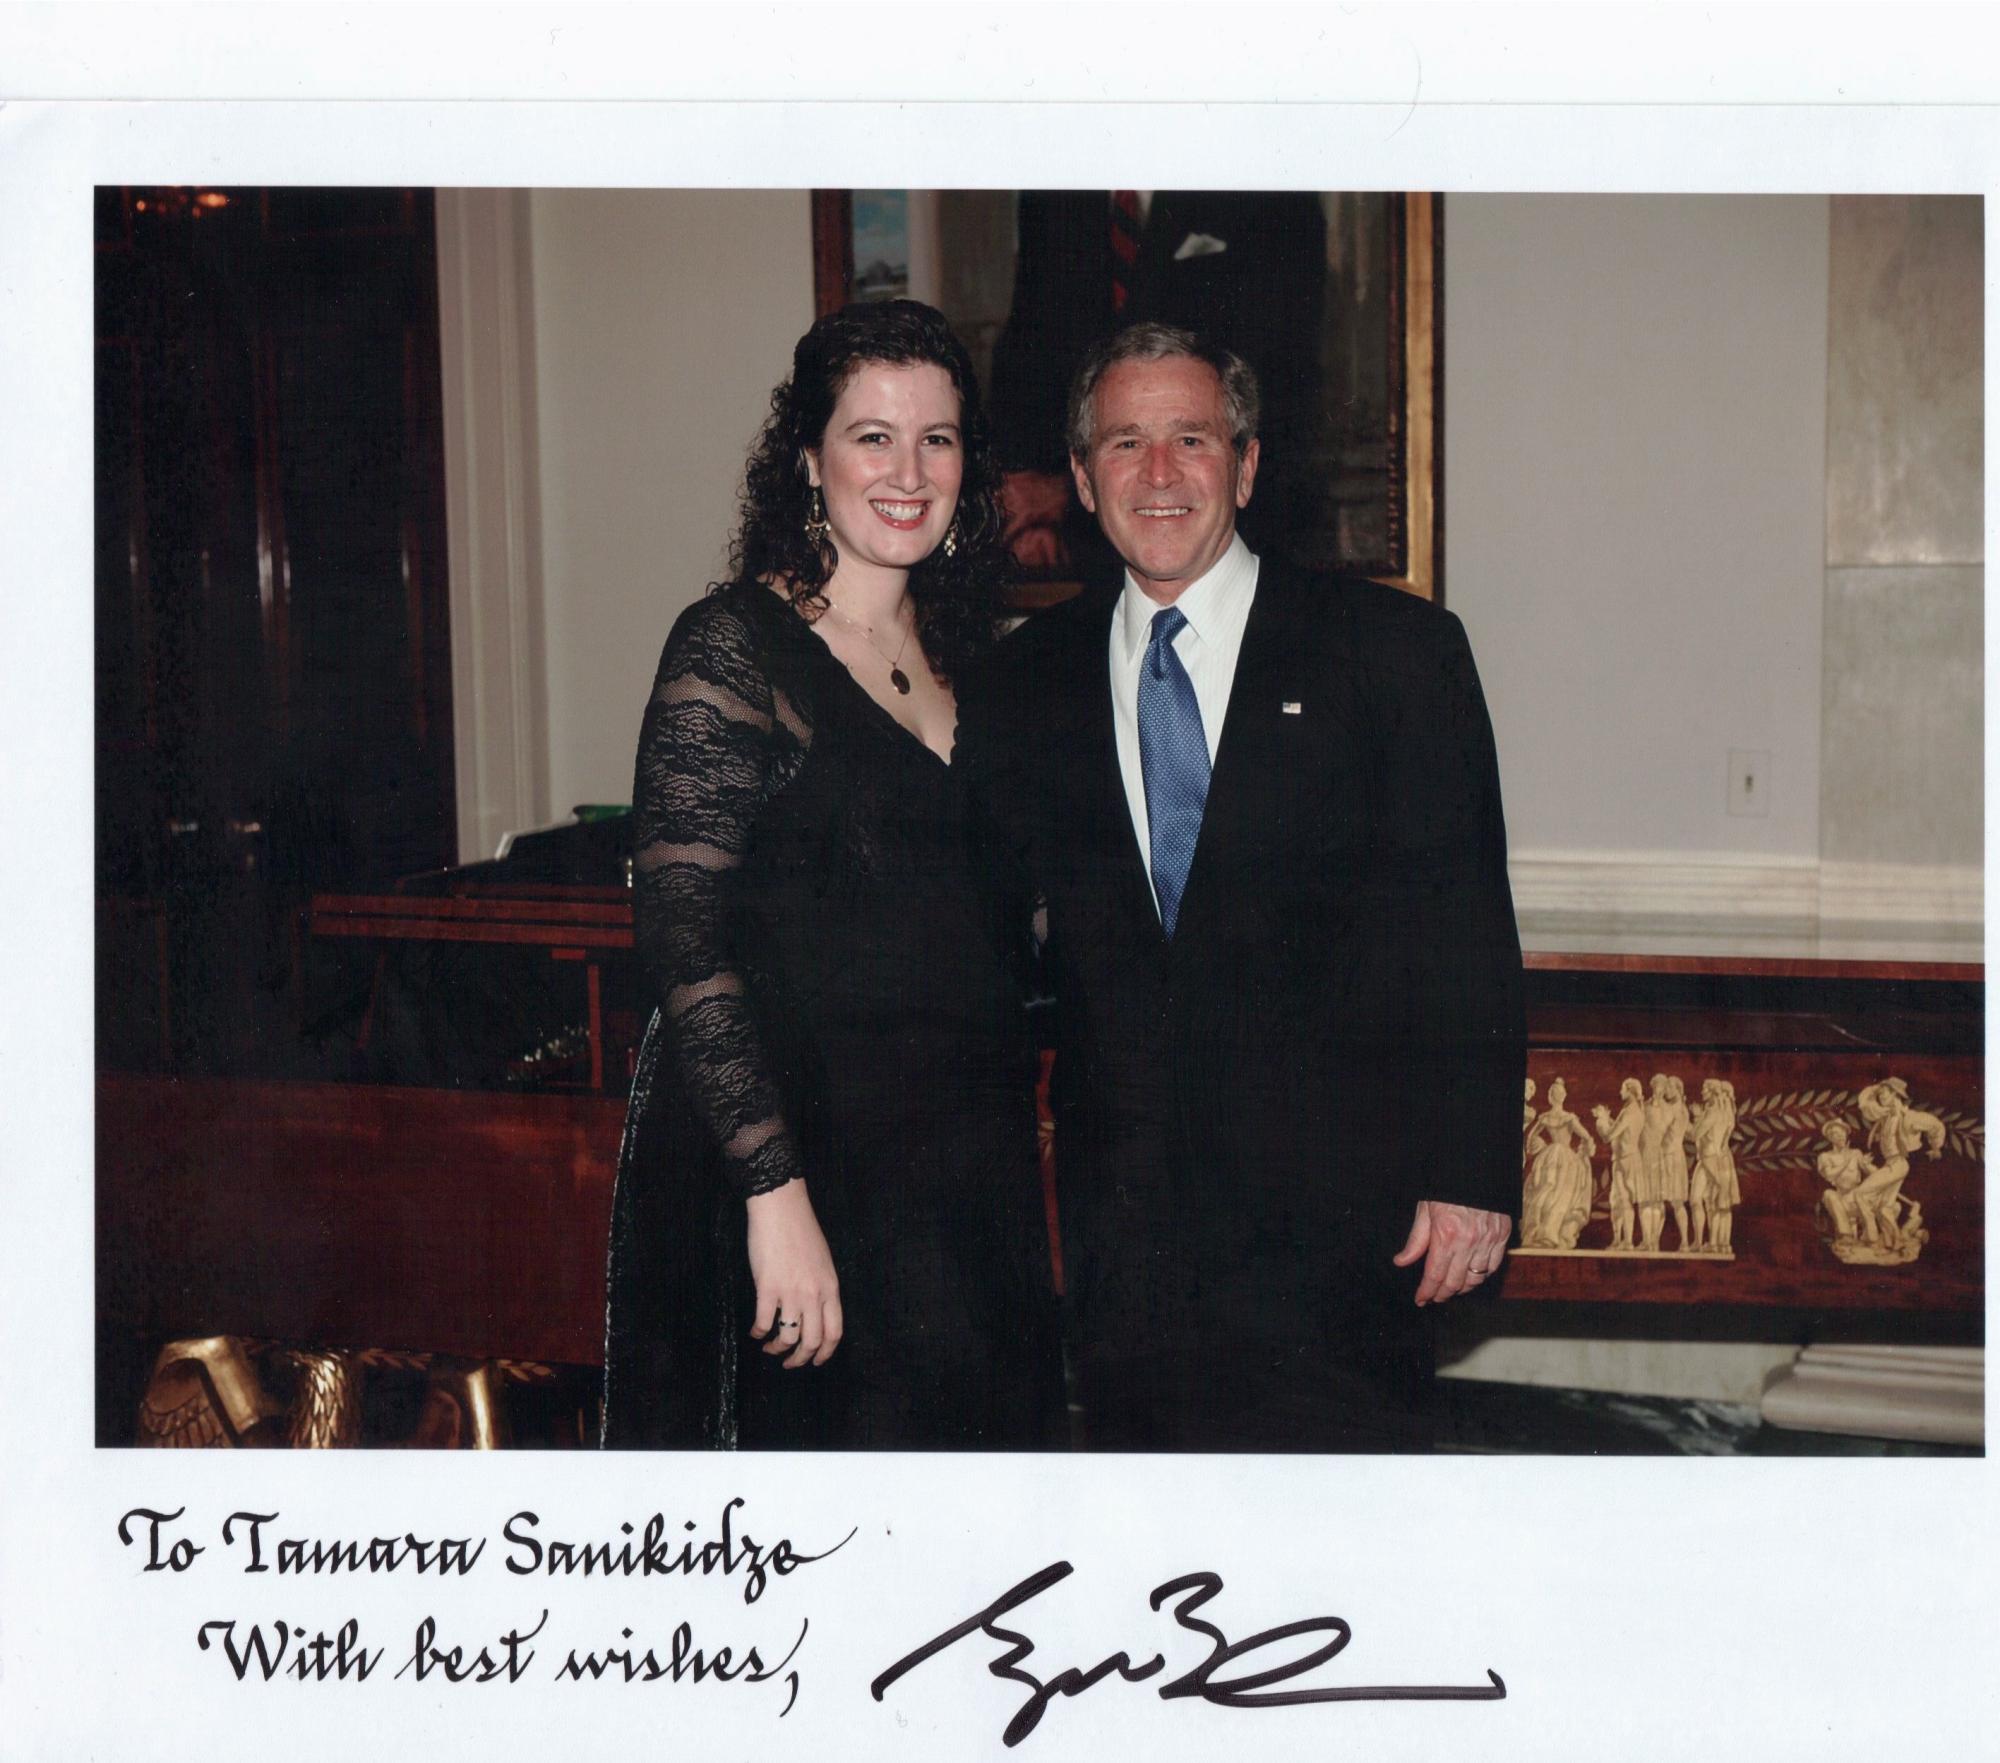 Autographed photo of Tamara Sanikidze with George W Bush